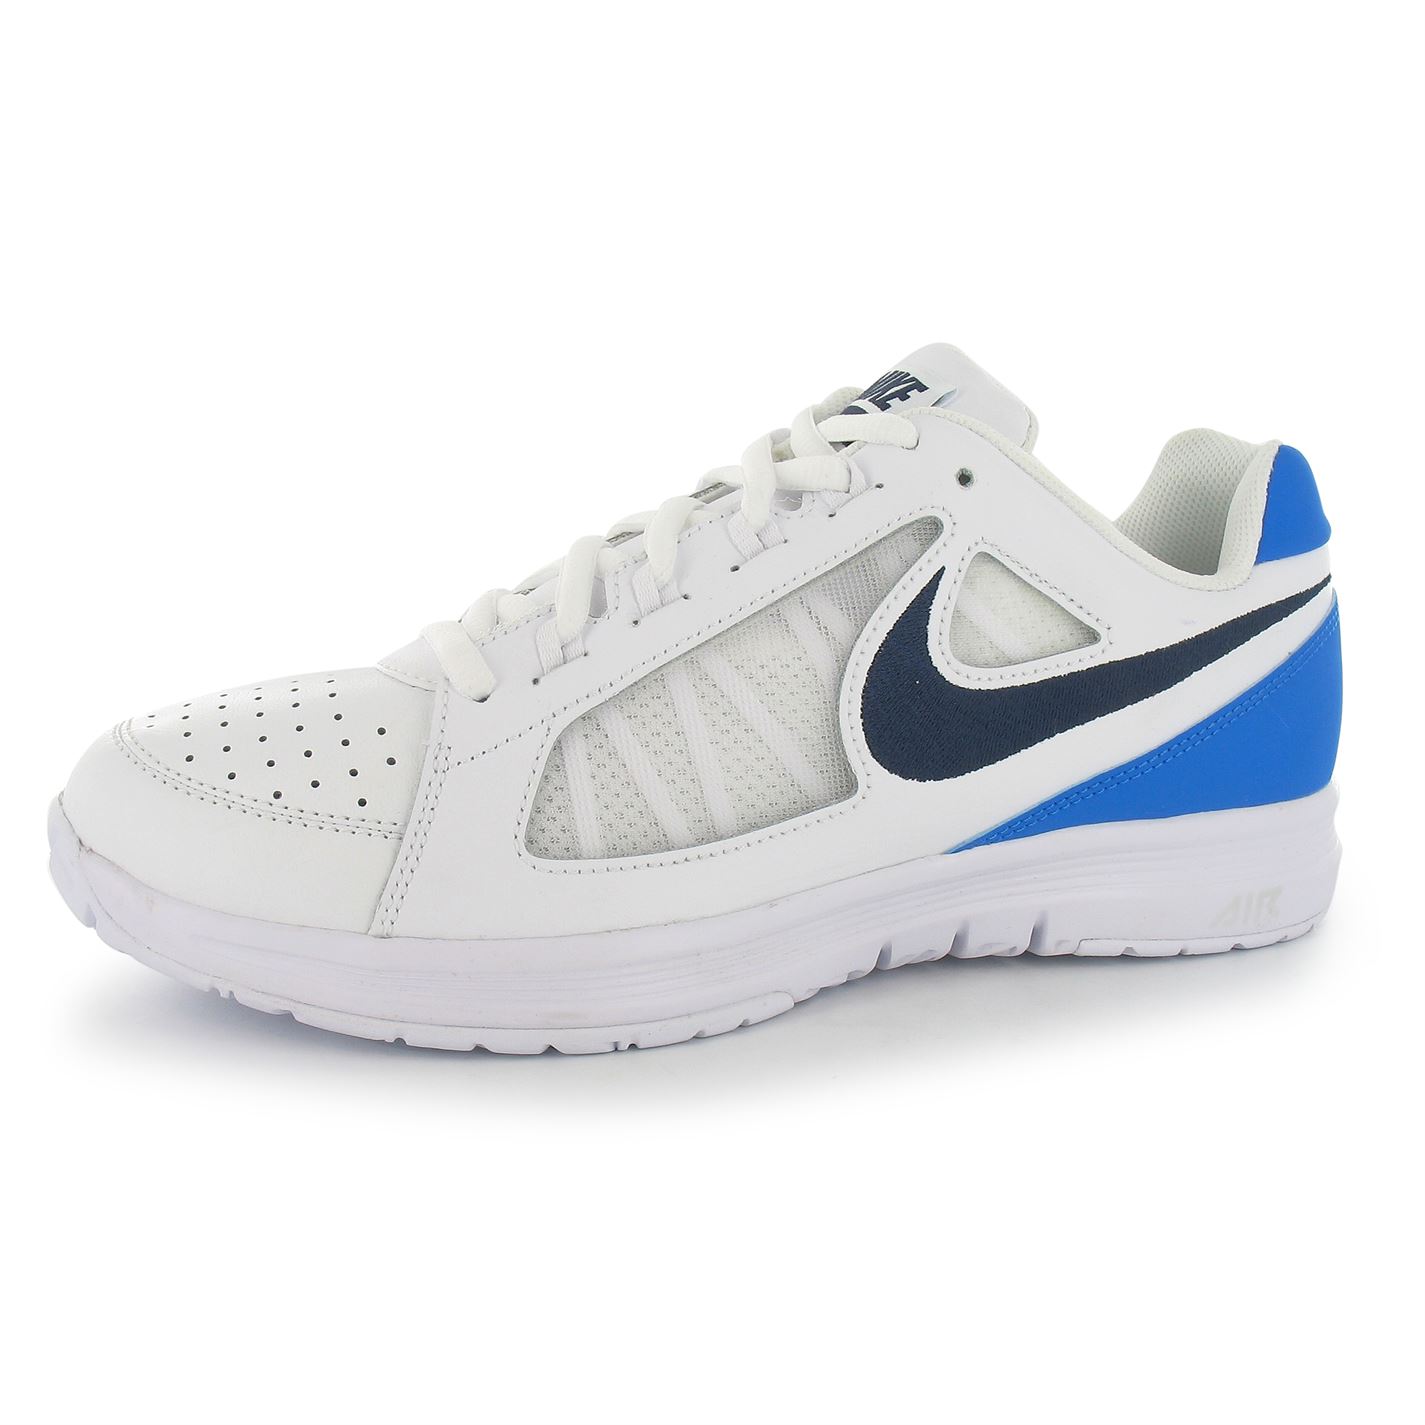 Adidasi de Tenis Nike Air Vapor Ace pentru Barbati alb bleumarin albastru